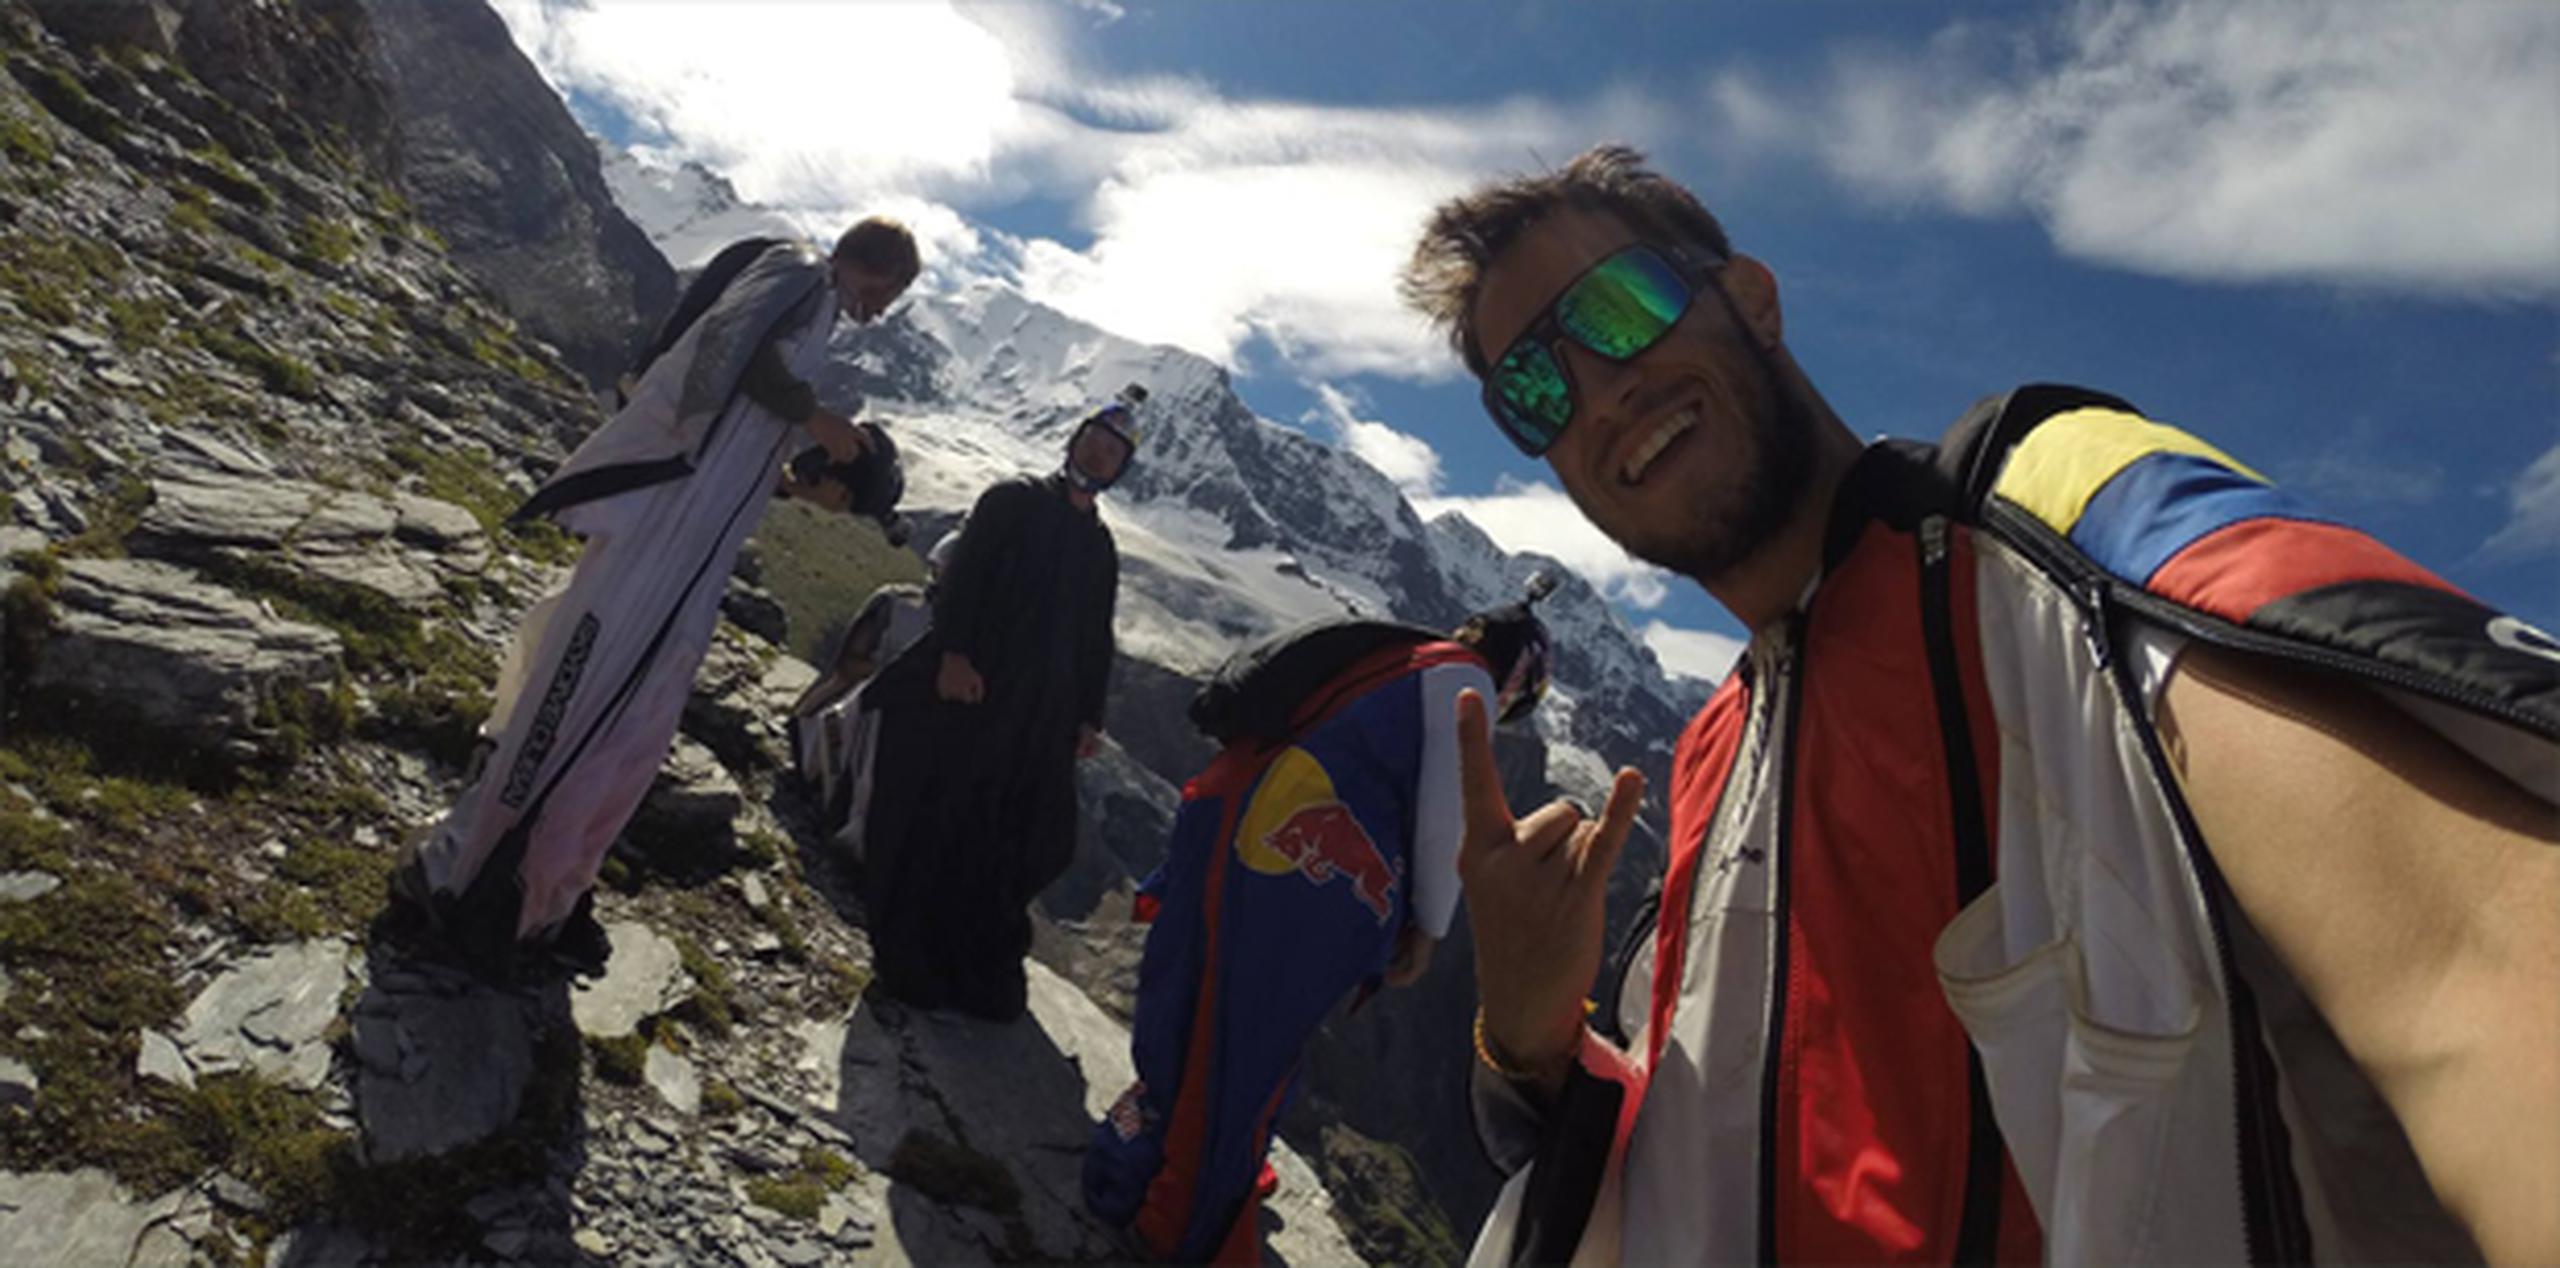 Flórez realizaba un salto base en Engelberg (Suiza) acompañado por dos compañeros que consiguieron aterrizar con seguridad, según un comunicado de Red Bull. (Facebook)